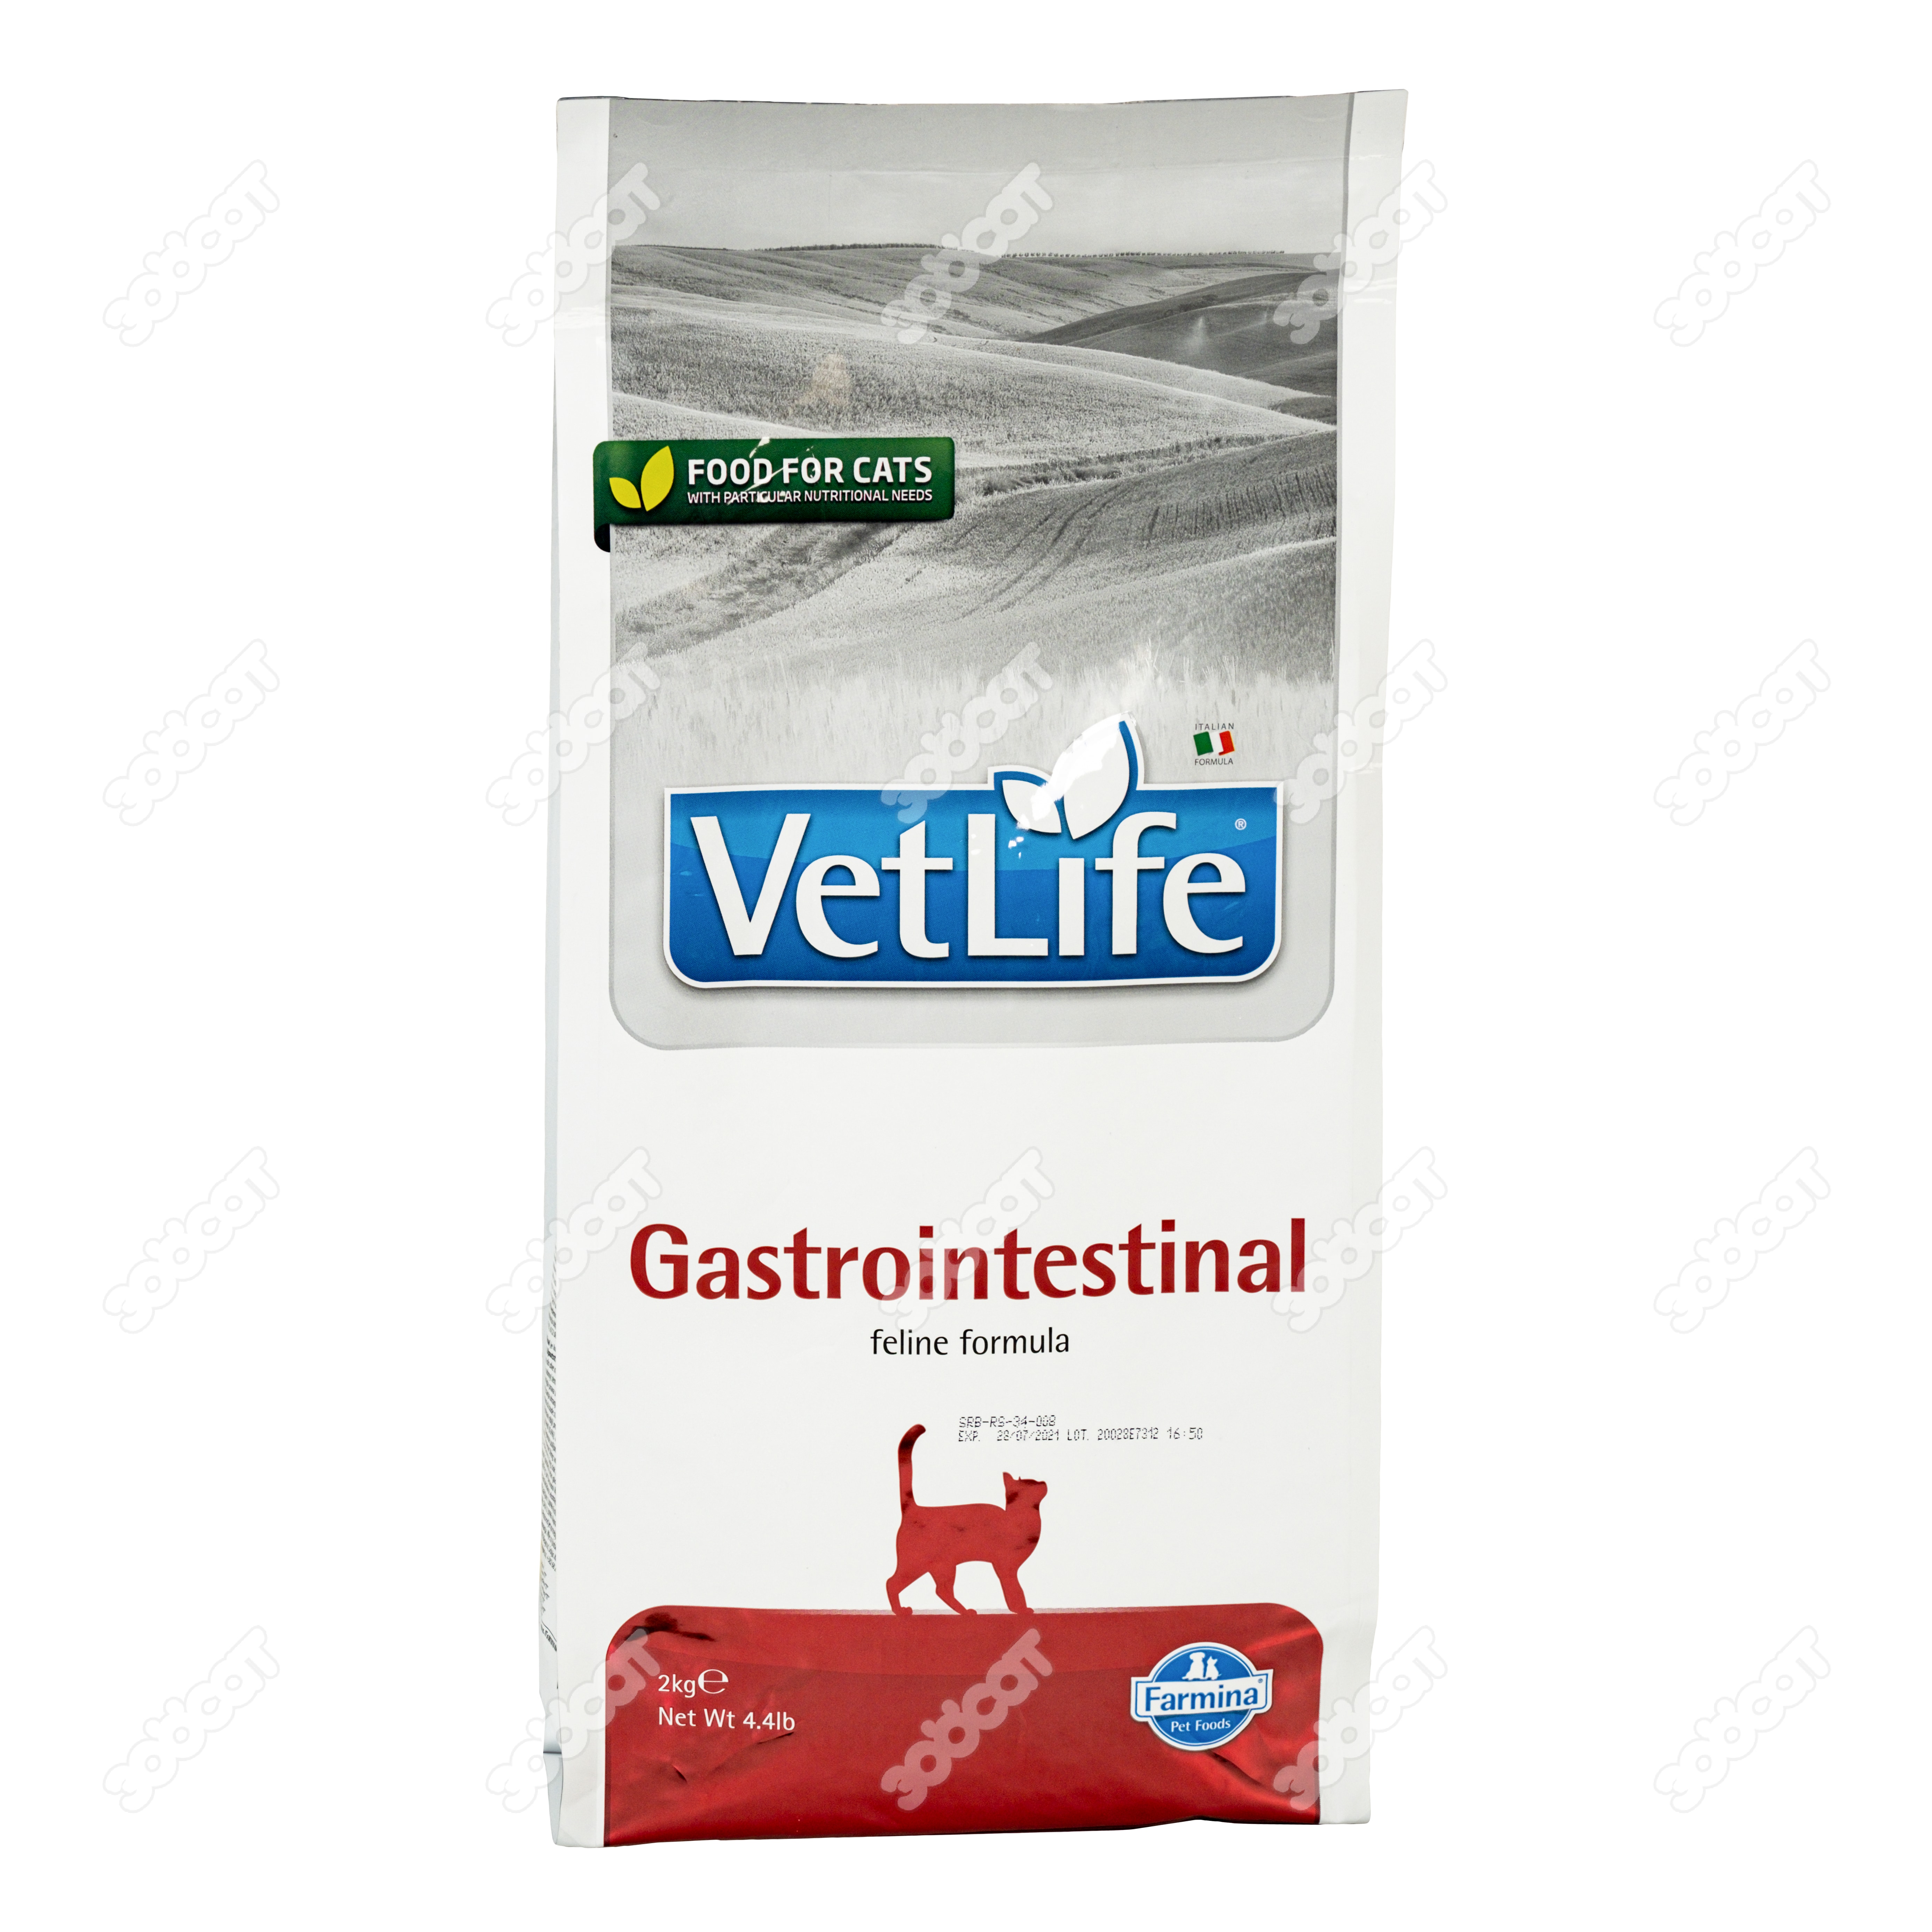 Vet life gastrointestinal сухой. Vet Life Gastrointestinal корм для кошек. Фармина гастро Интестинал для кошек. Farmina vet Life Gastro intestinal для кошек сухой. Фармина Gastrointestinal для кошек новая упаковка.